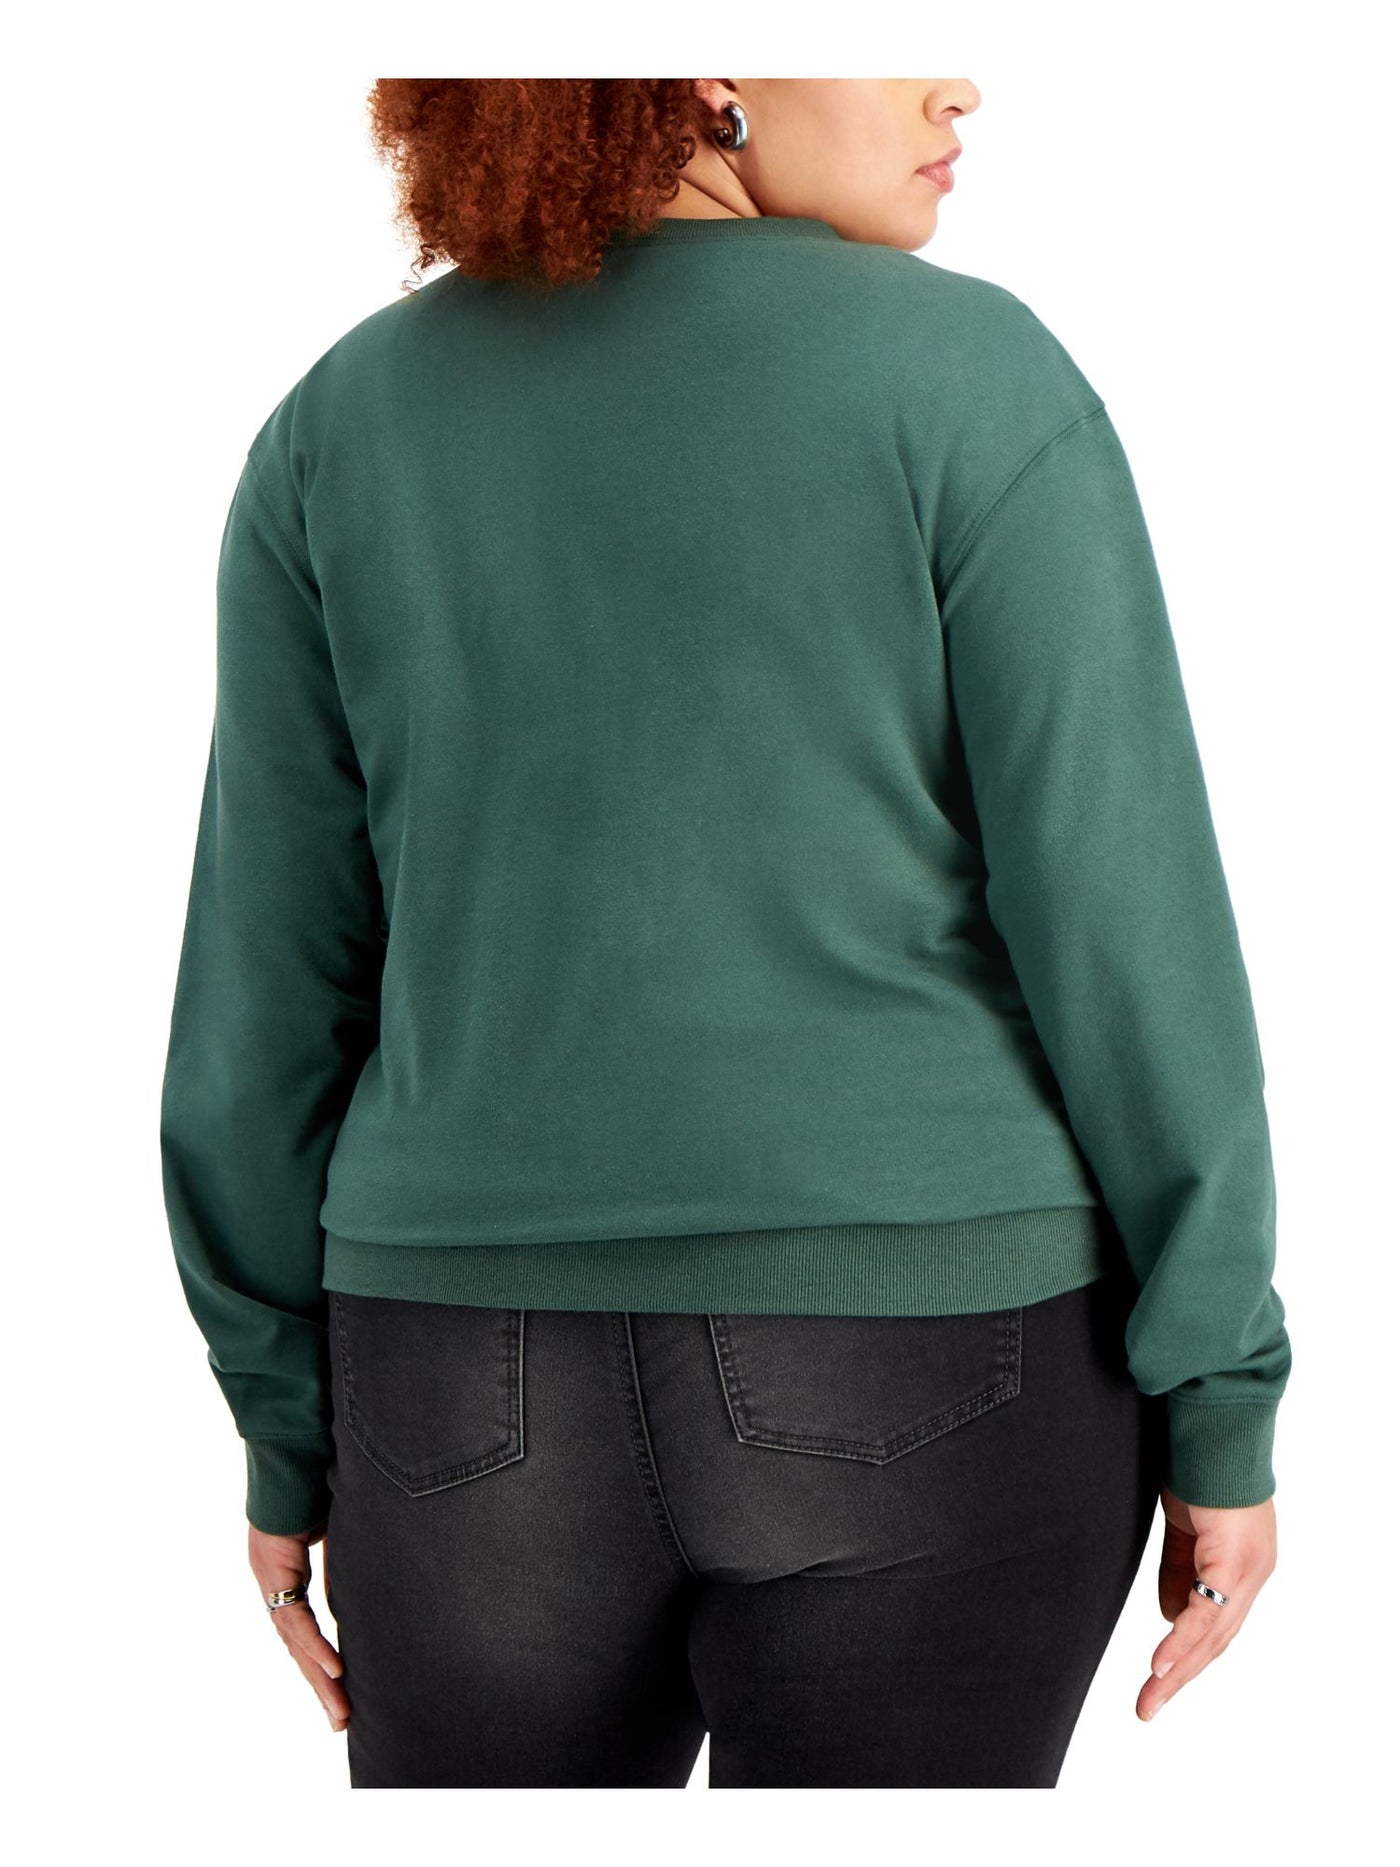 MIGHTY FINE Womens Green Graphic Long Sleeve Crew Neck Sweatshirt Plus 2X